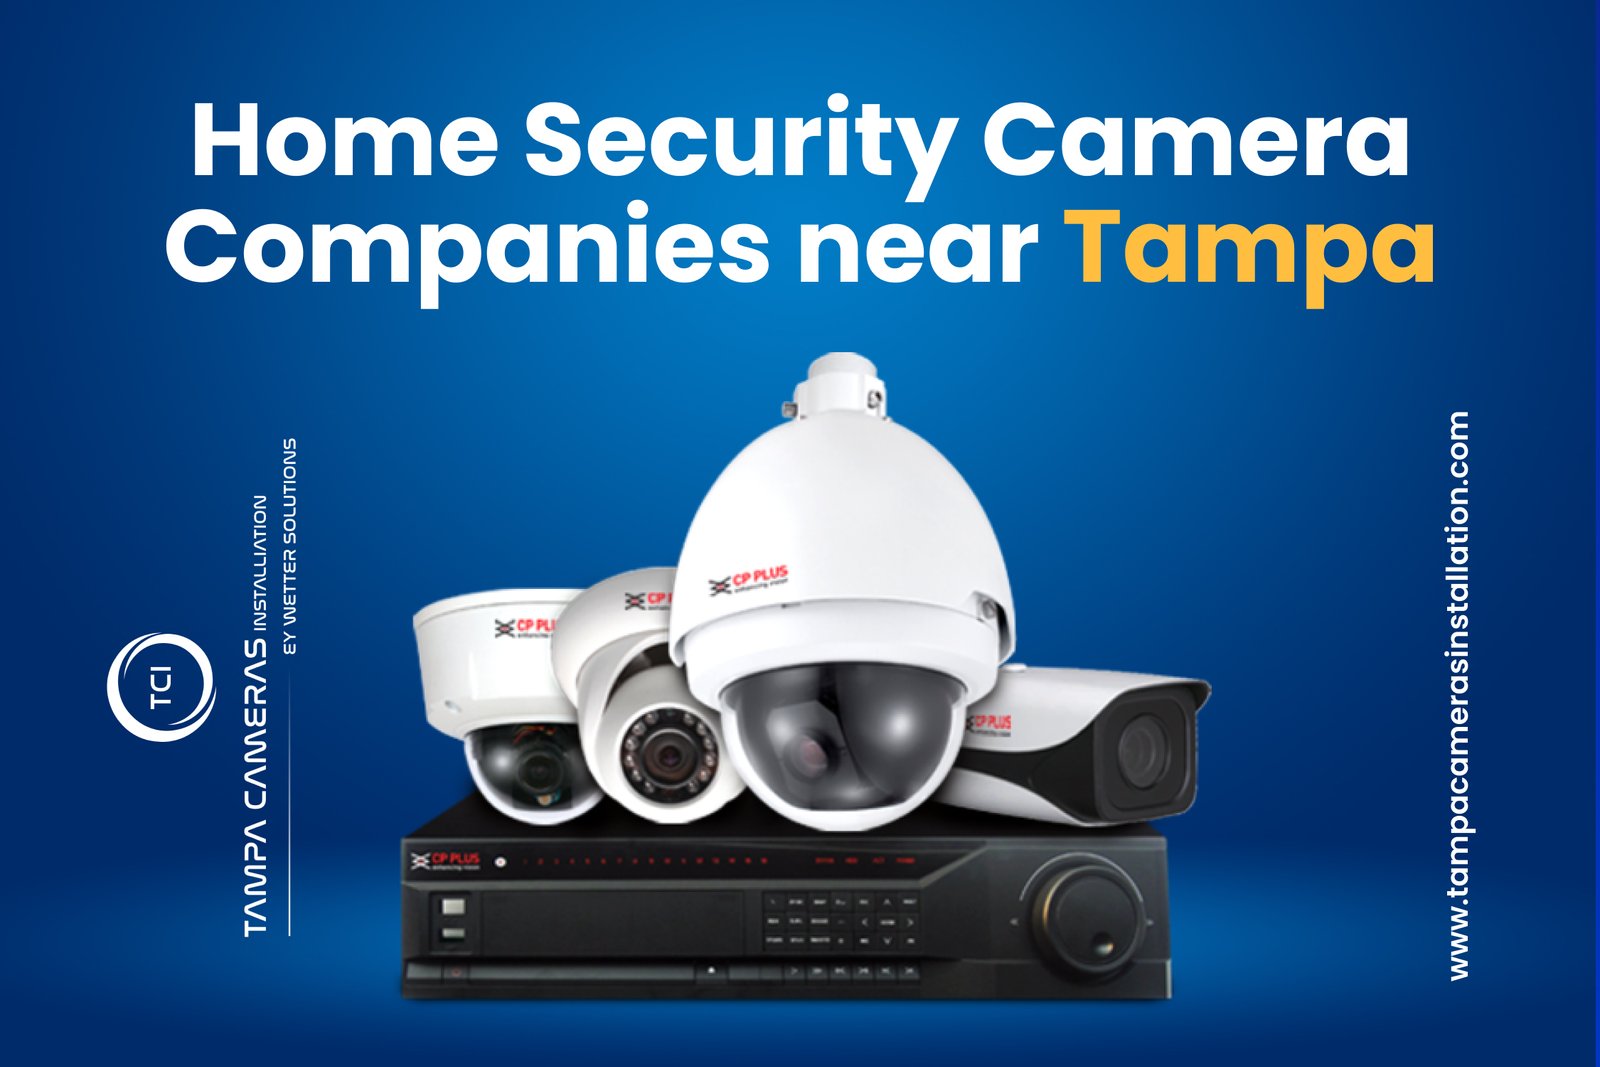 Home security camera companies near Tampa